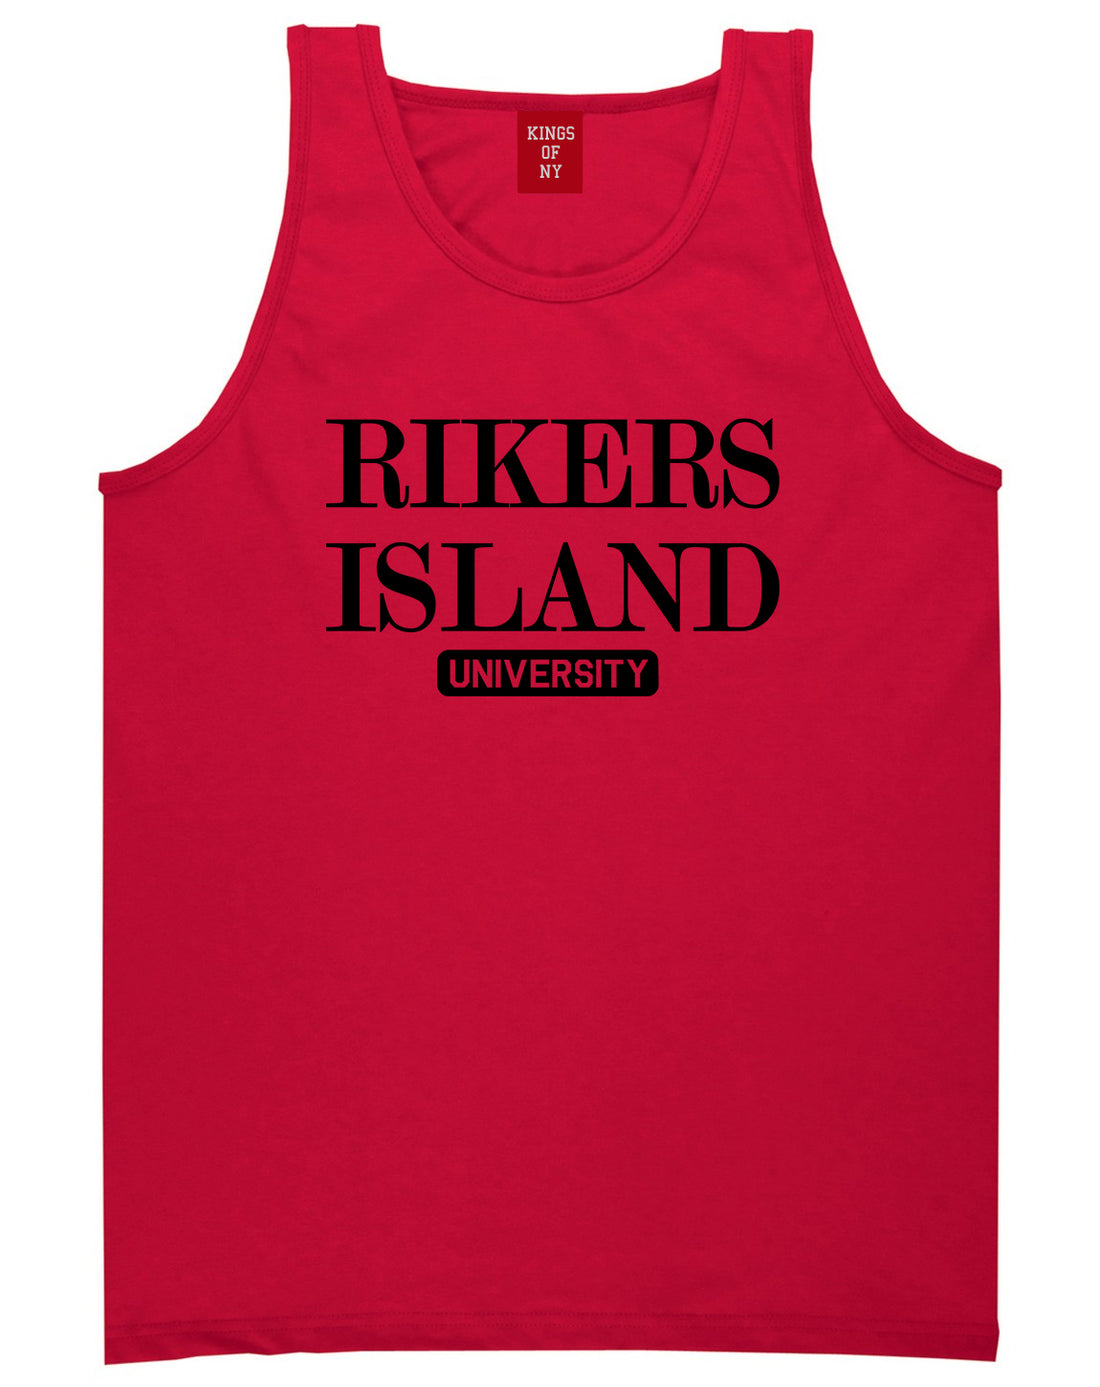 Rikers Island University Mens Tank Top T-Shirt Red